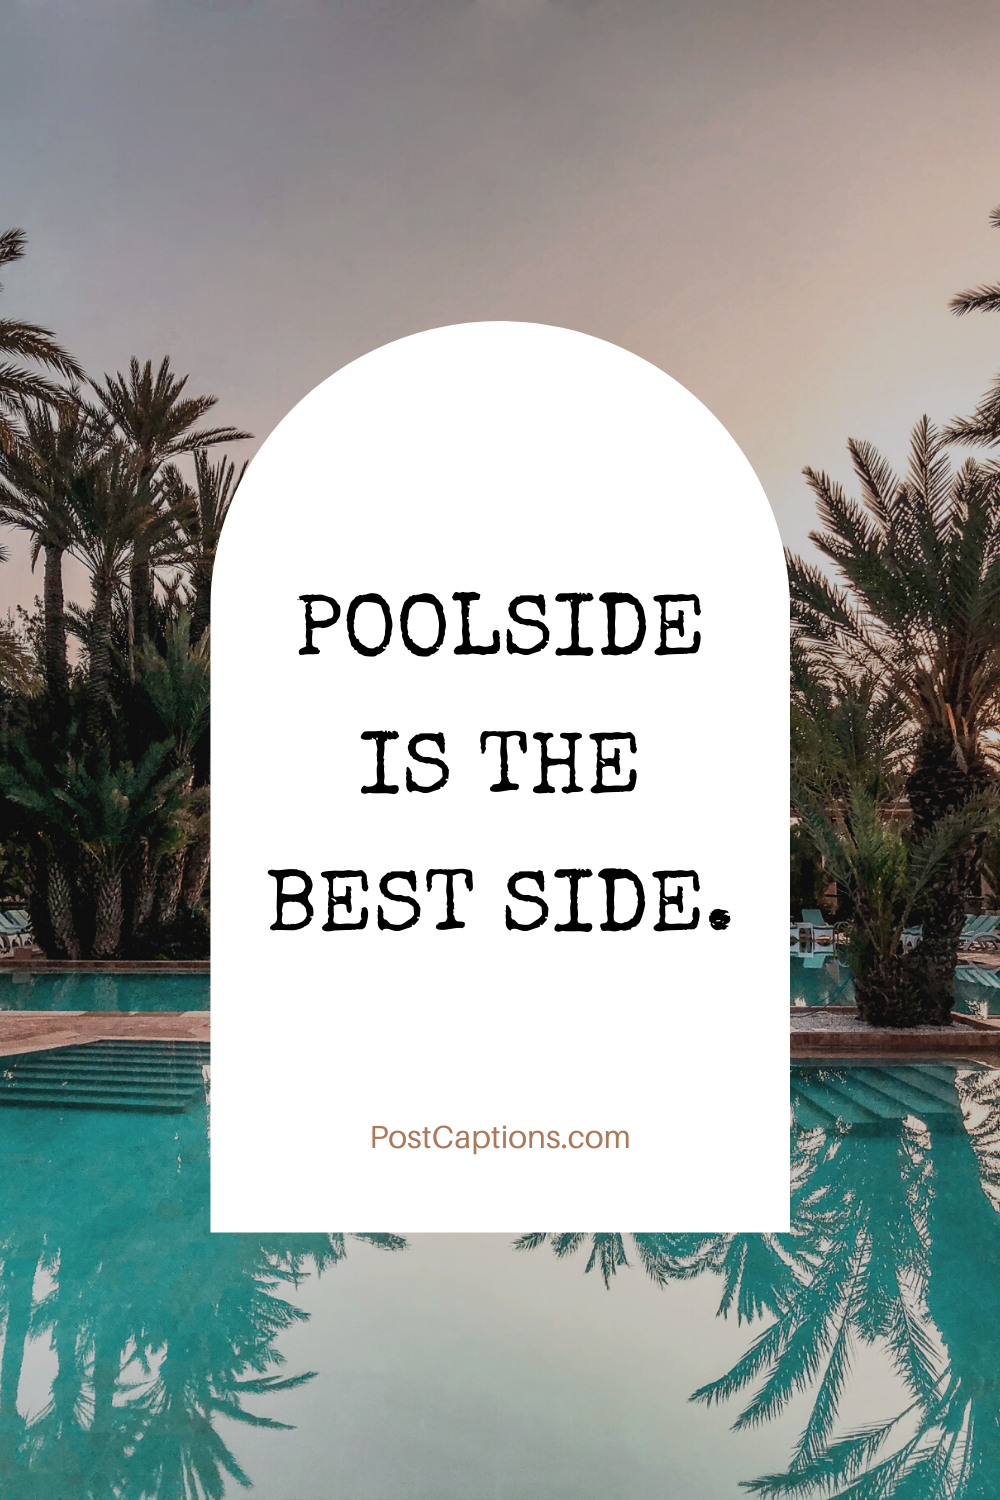 Poolside Instagram captions